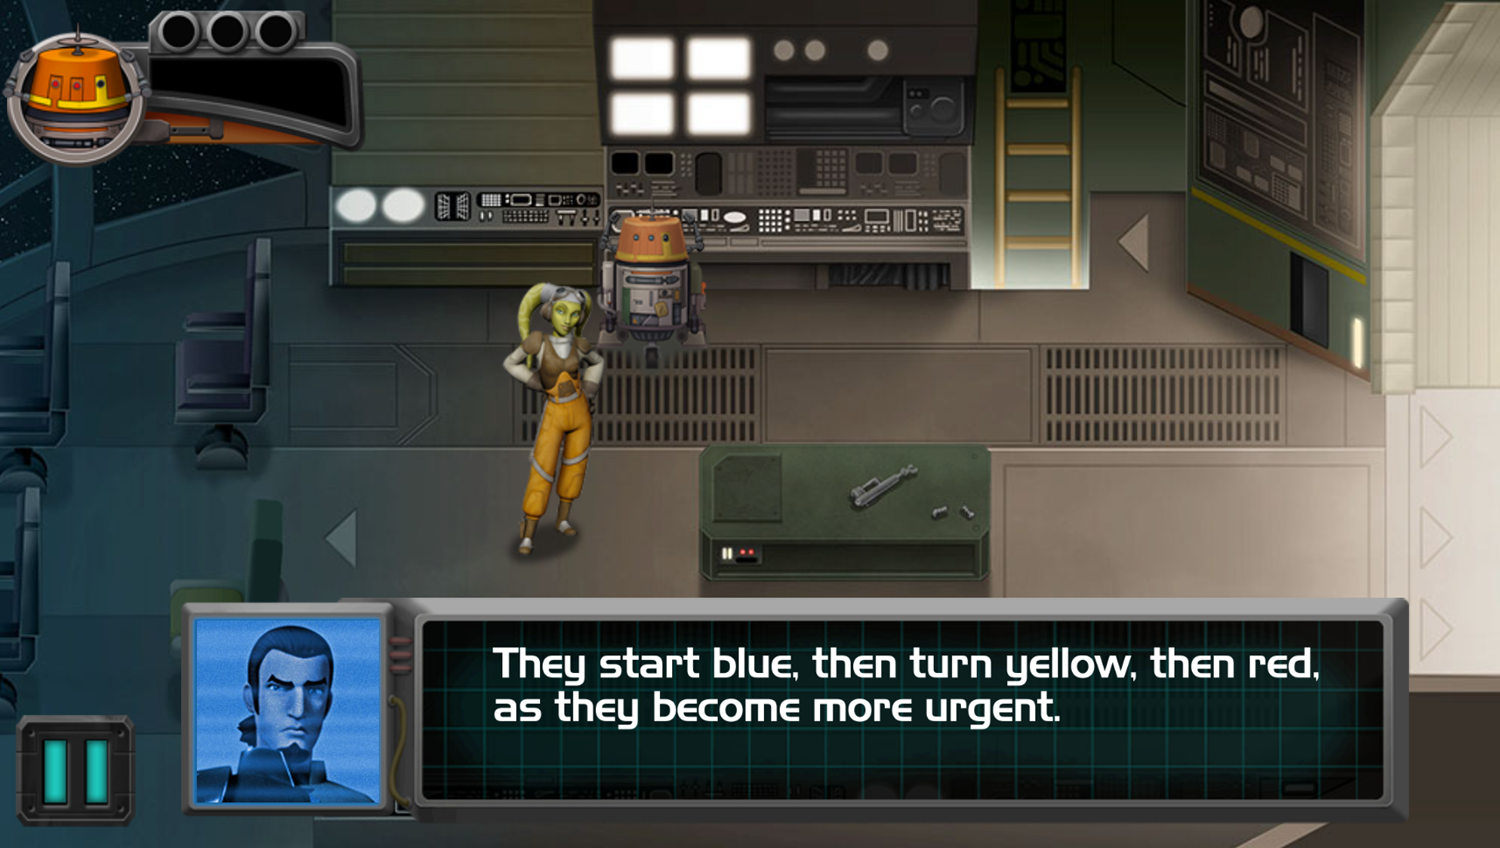 Star Wars Rebels Chopper Chase Game Instructions Screenshot.